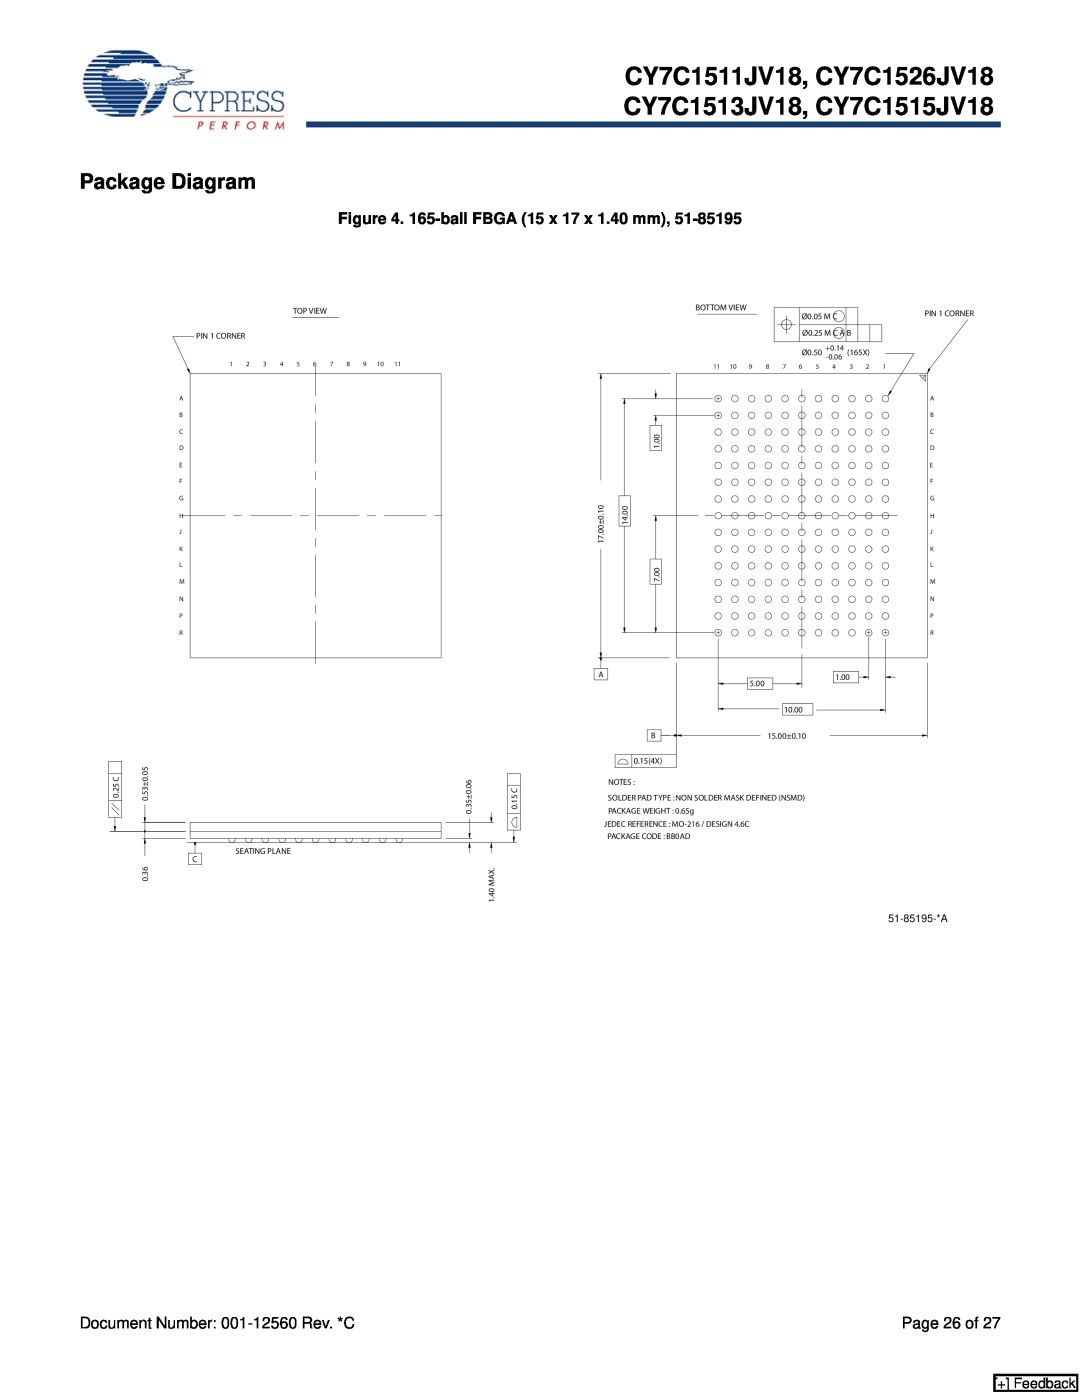 Cypress manual Package Diagram, CY7C1511JV18, CY7C1526JV18 CY7C1513JV18, CY7C1515JV18, 165-ball FBGA 15 x 17 x 1.40 mm 